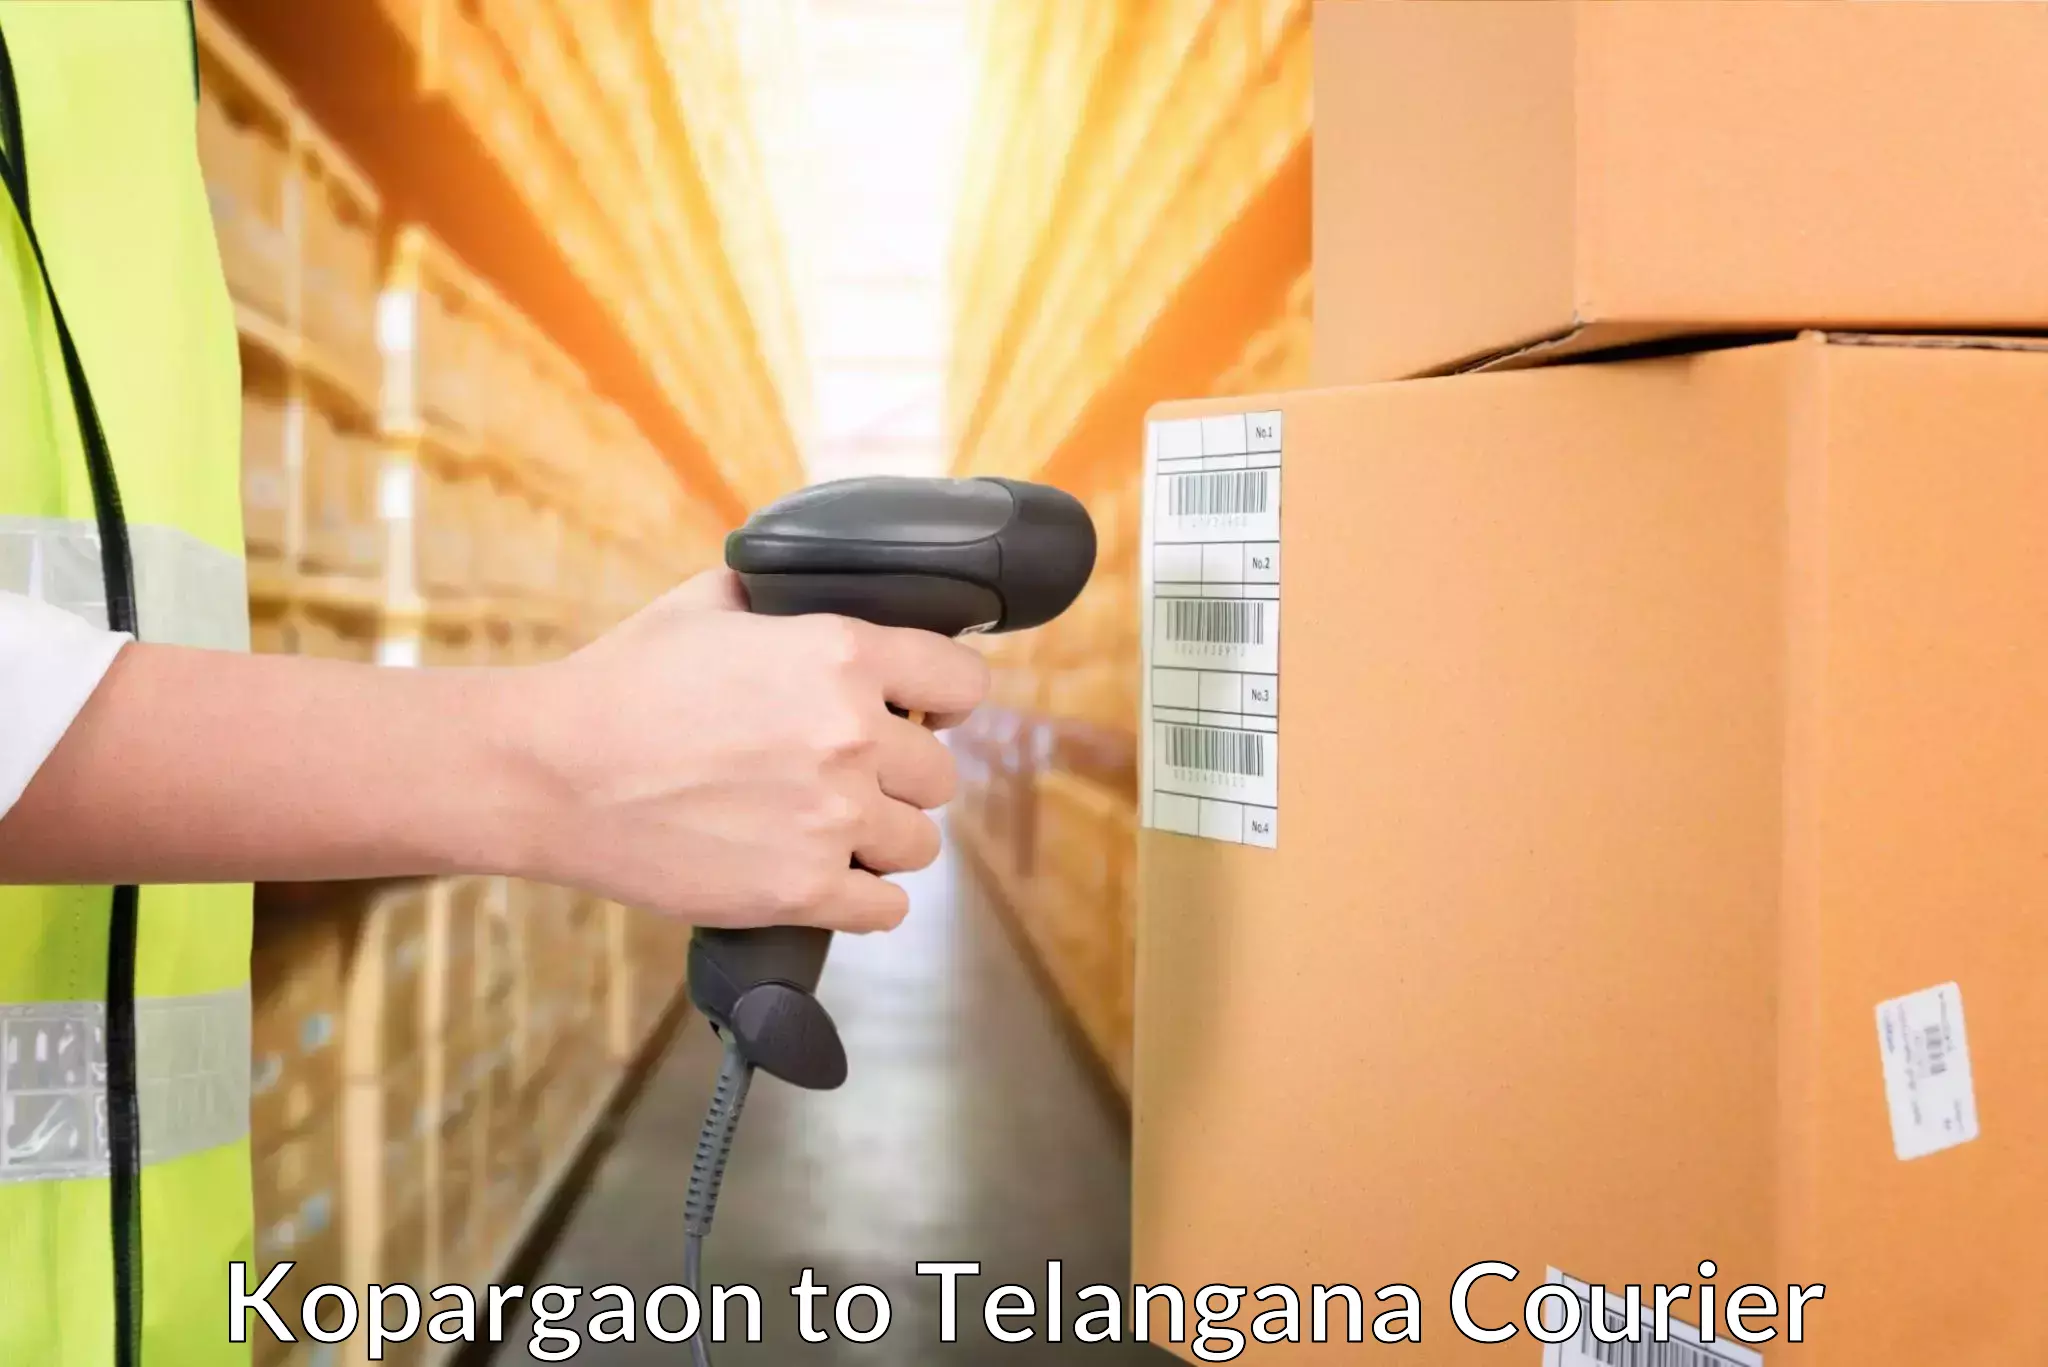 Global logistics network Kopargaon to Trimulgherry